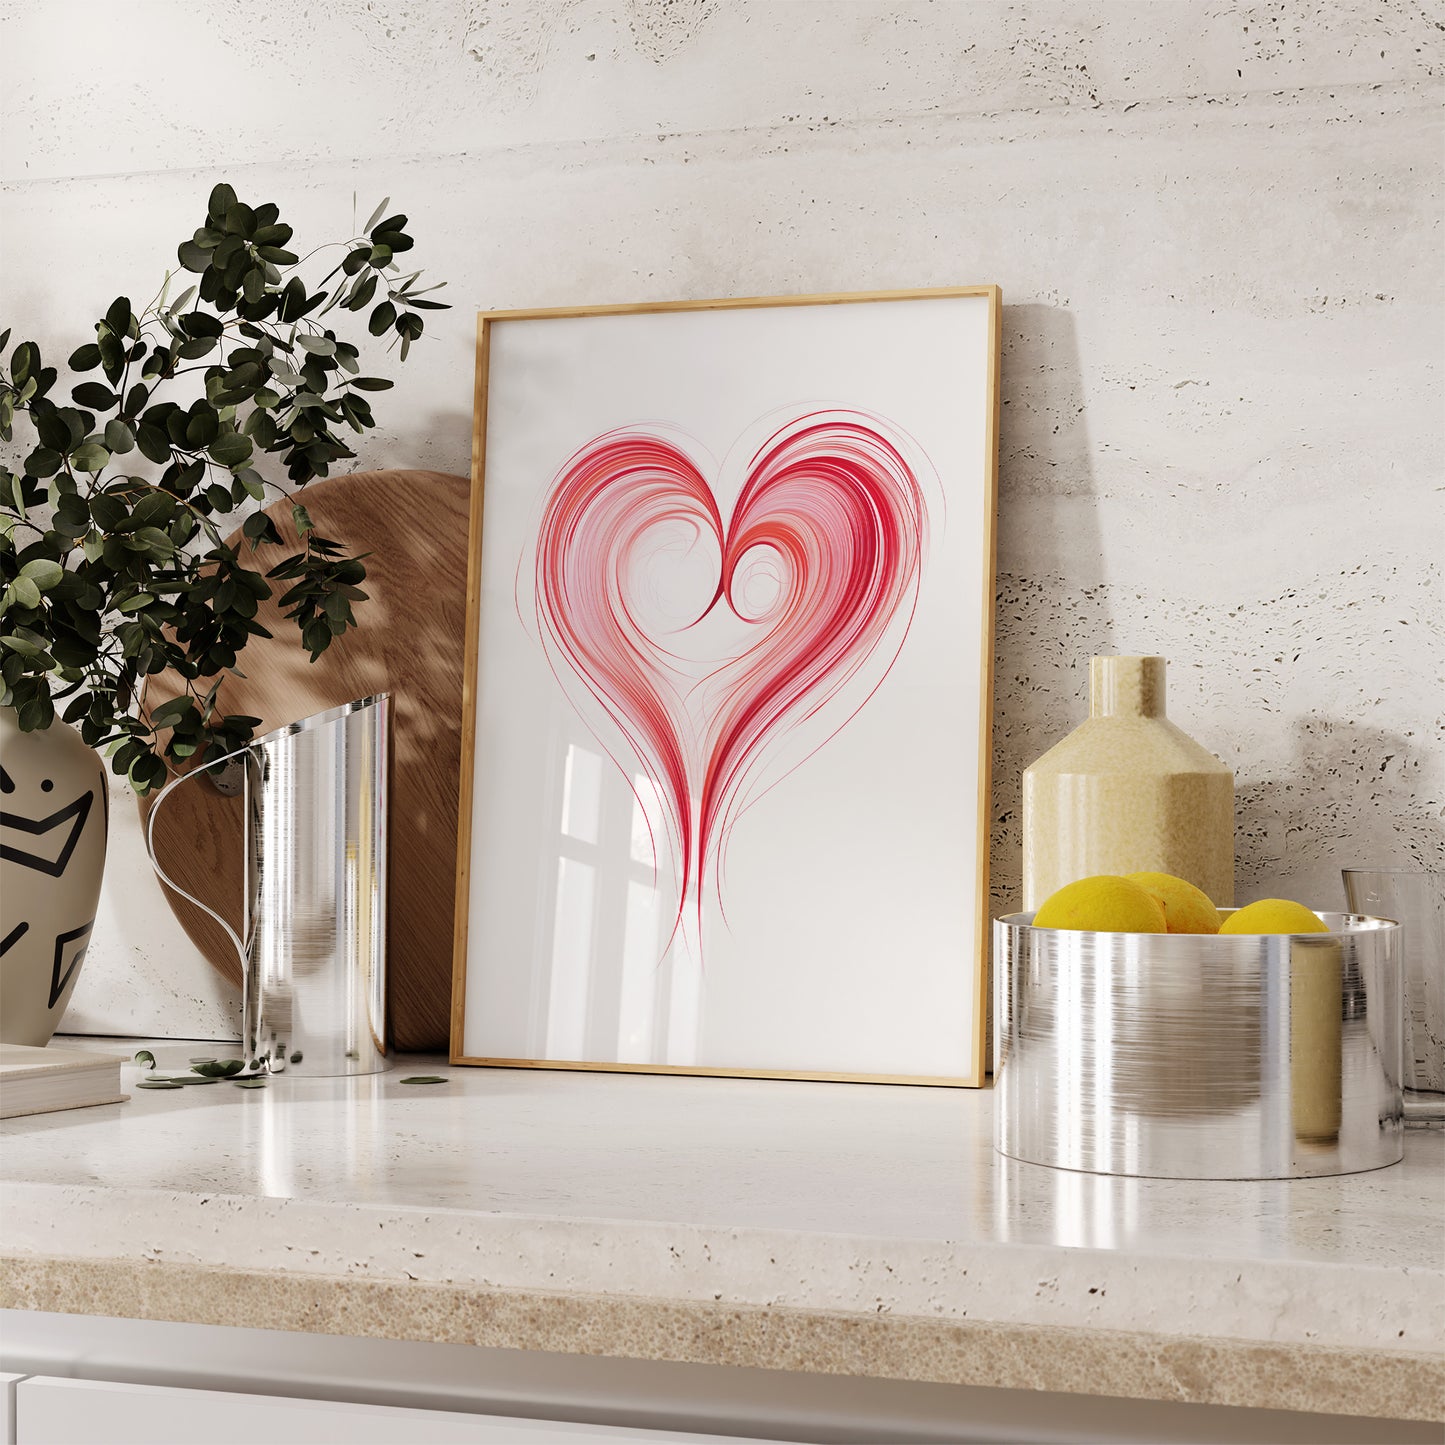 Modern heart-shaped artwork on a kitchen counter beside decorative items.